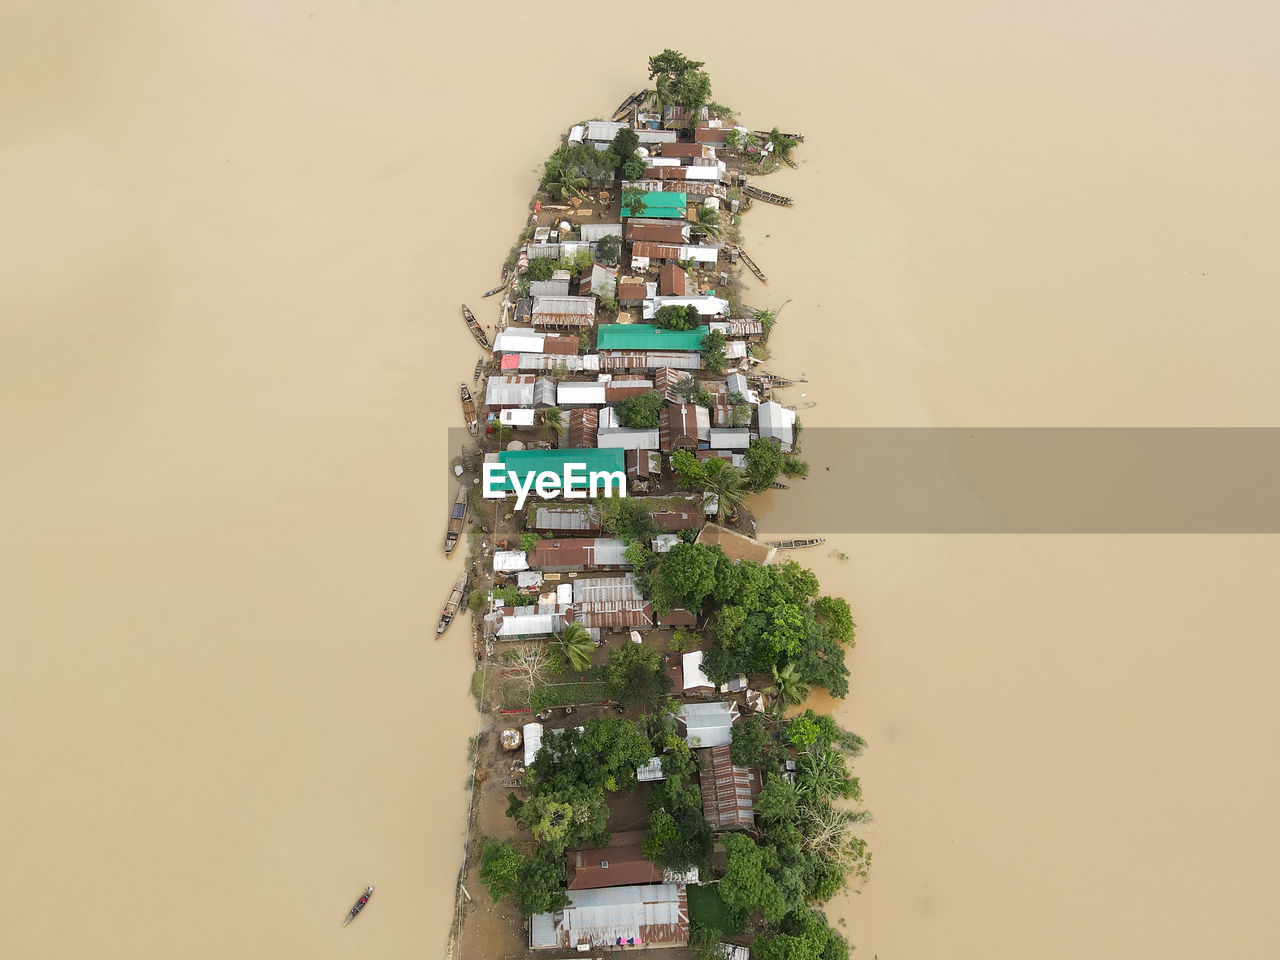 Flooded village in sunamganj bangladesh 